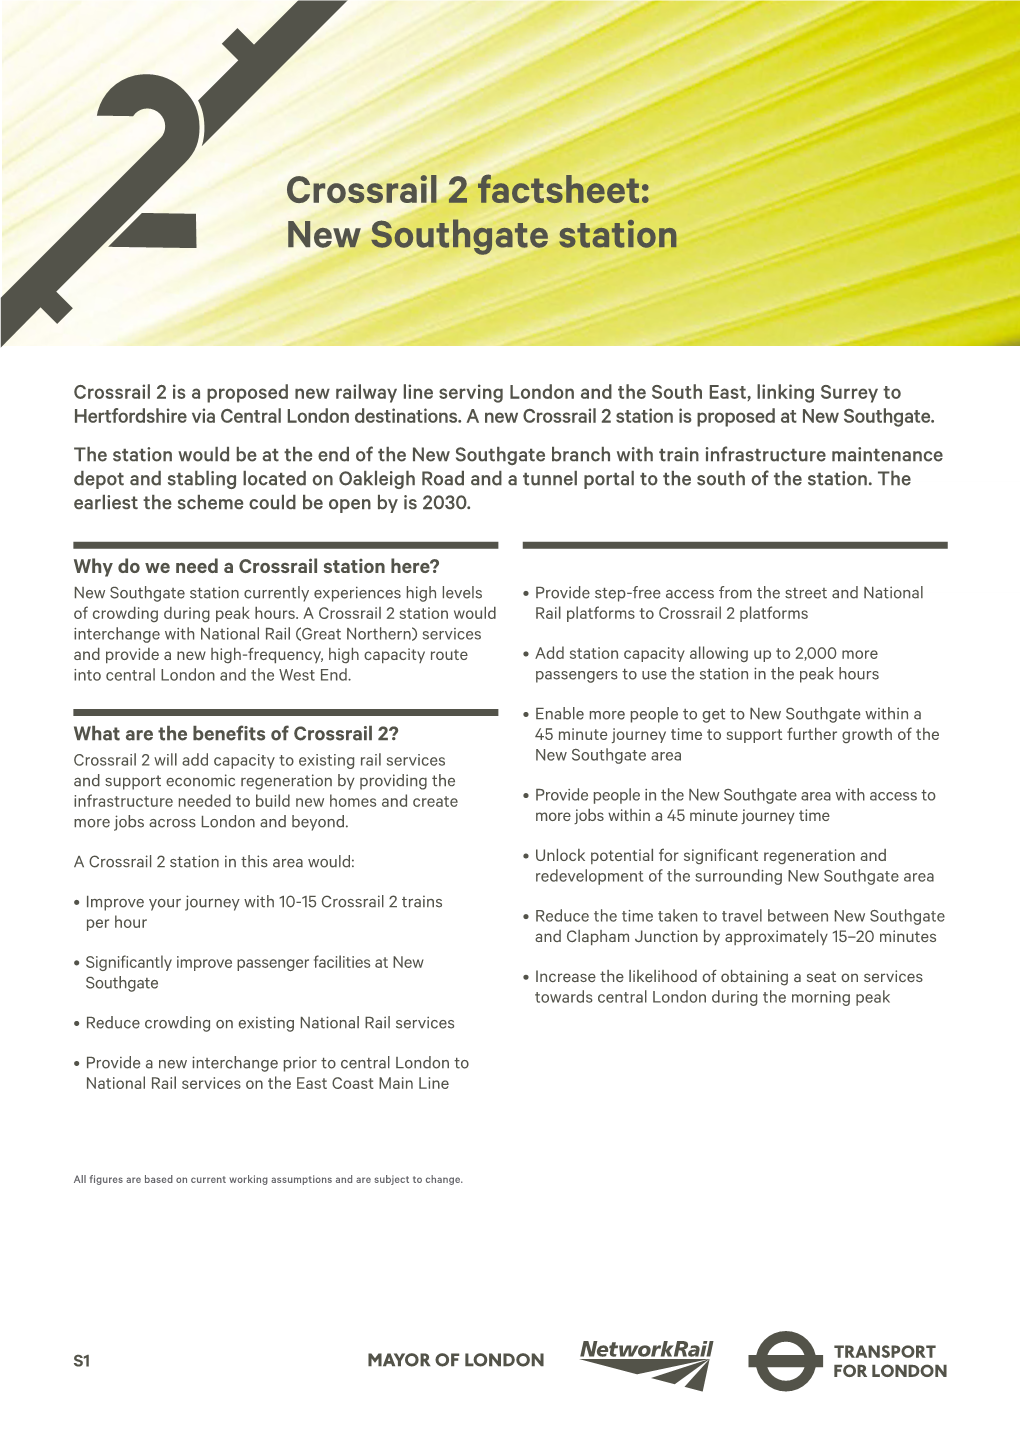 Crossrail 2 Factsheet: New Southgate Station